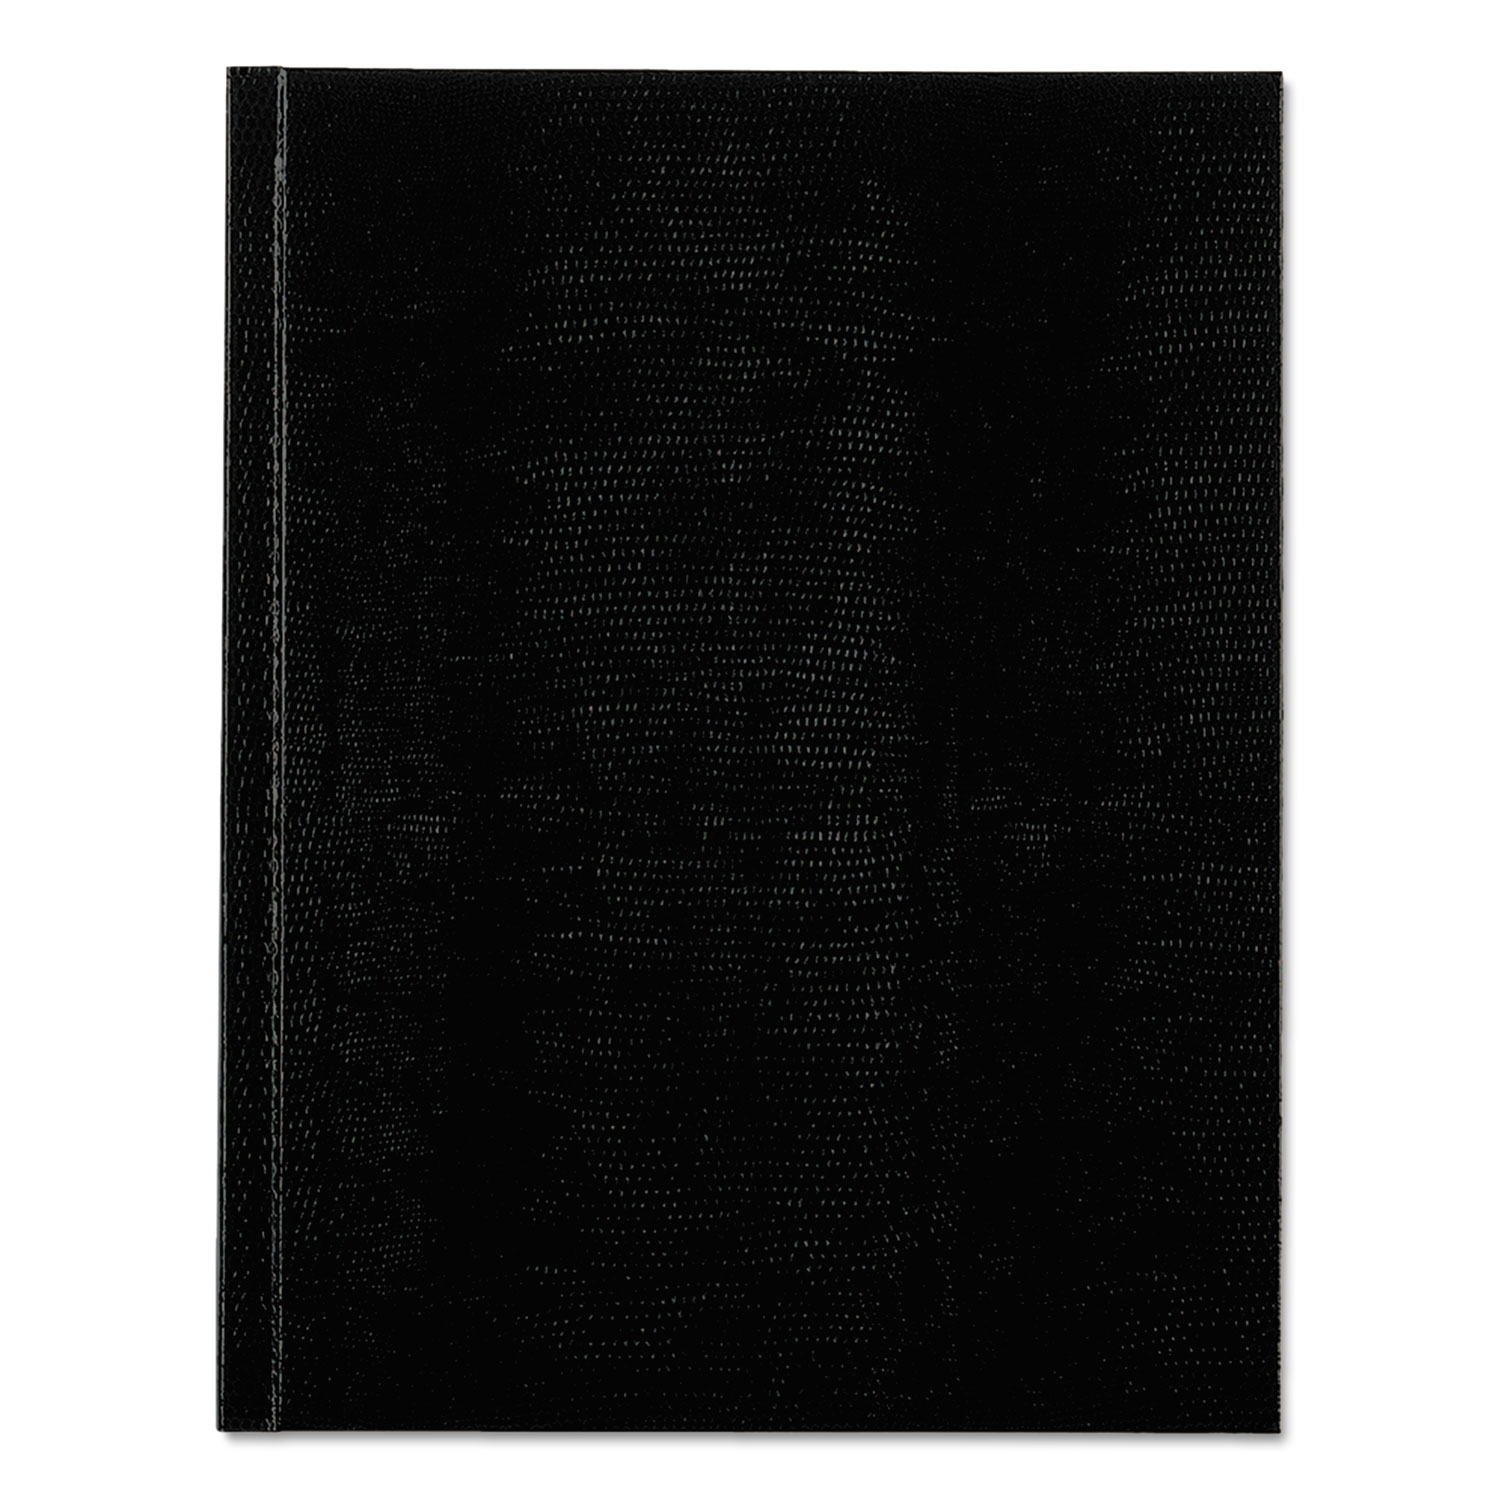  Blueline A7.BLK Executive Notebook, Medium/College Rule, Black Cover, 9.25 x 7.25, 150 Sheets (REDA7BLK) 